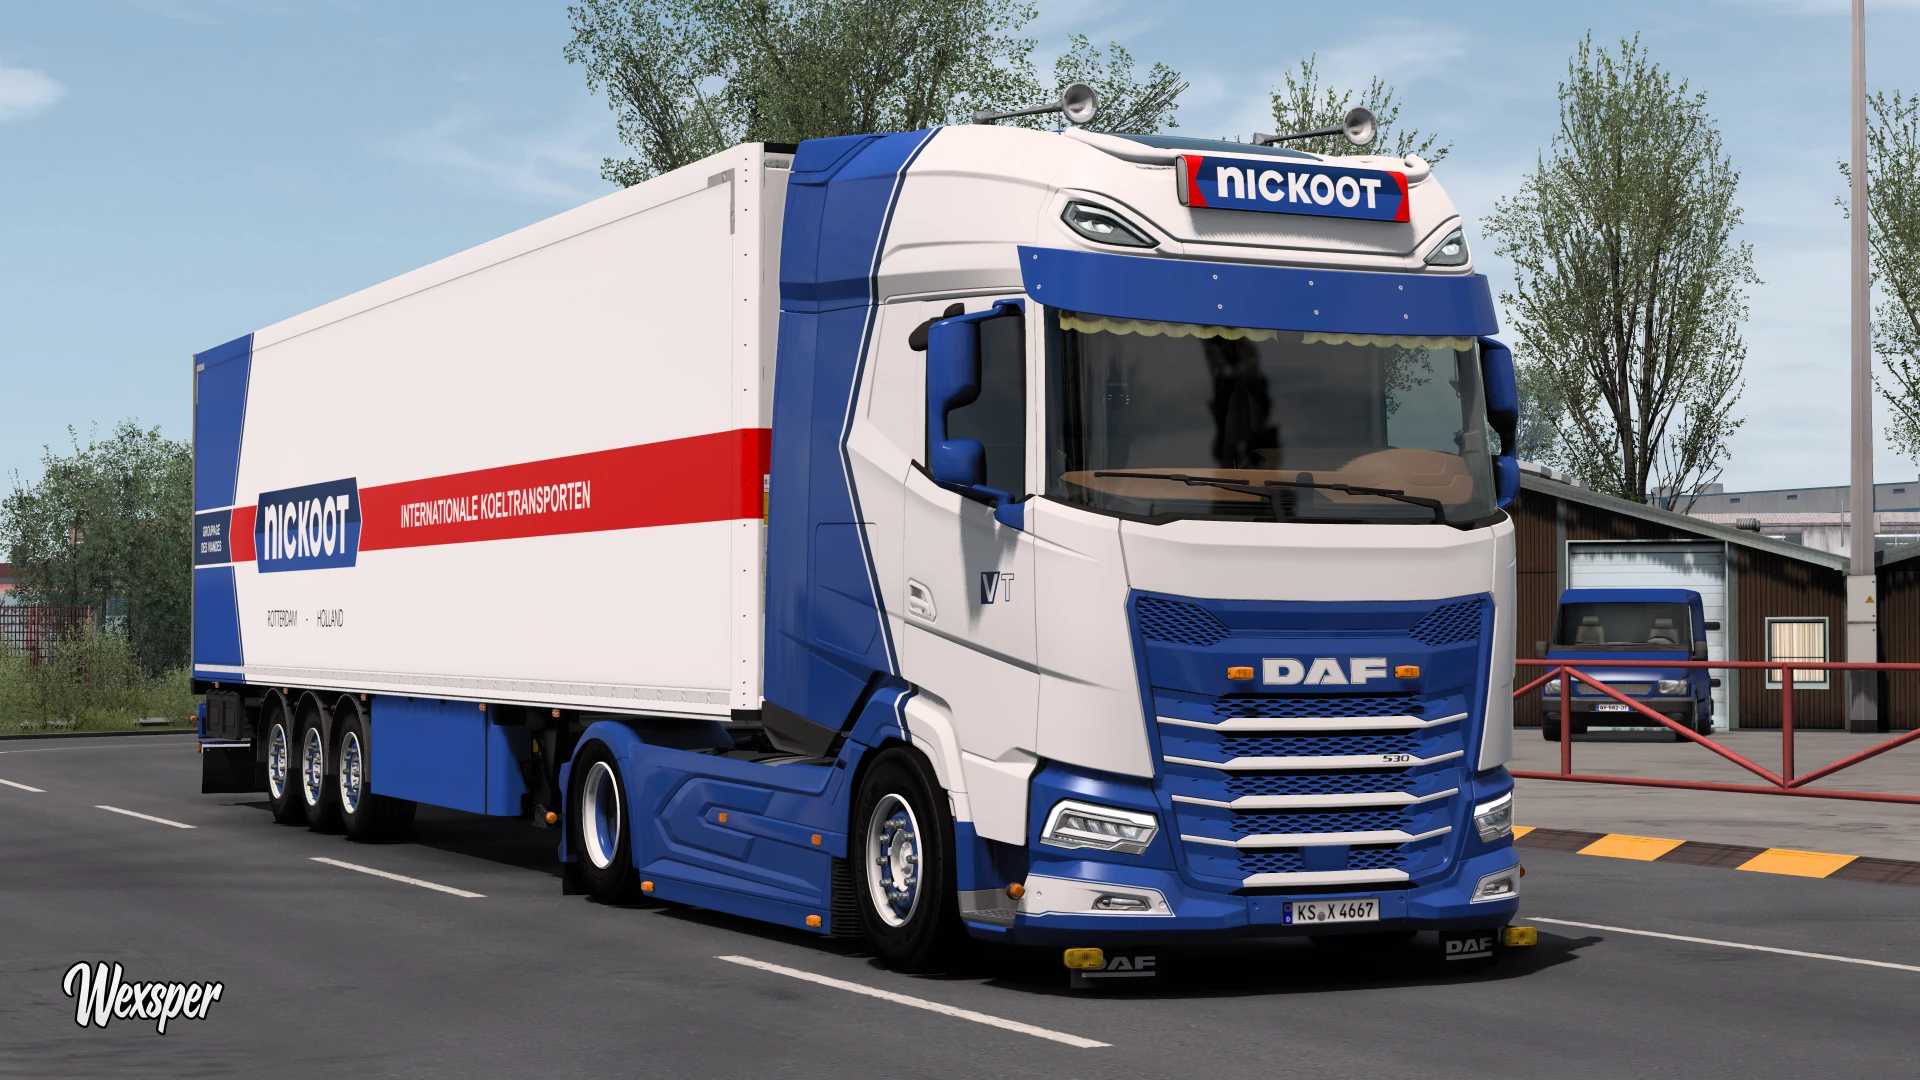 Daf Xg Nickoot Skin Pack V Ets Euro Truck Simulator Mods 53928 Hot Sex Picture 2087